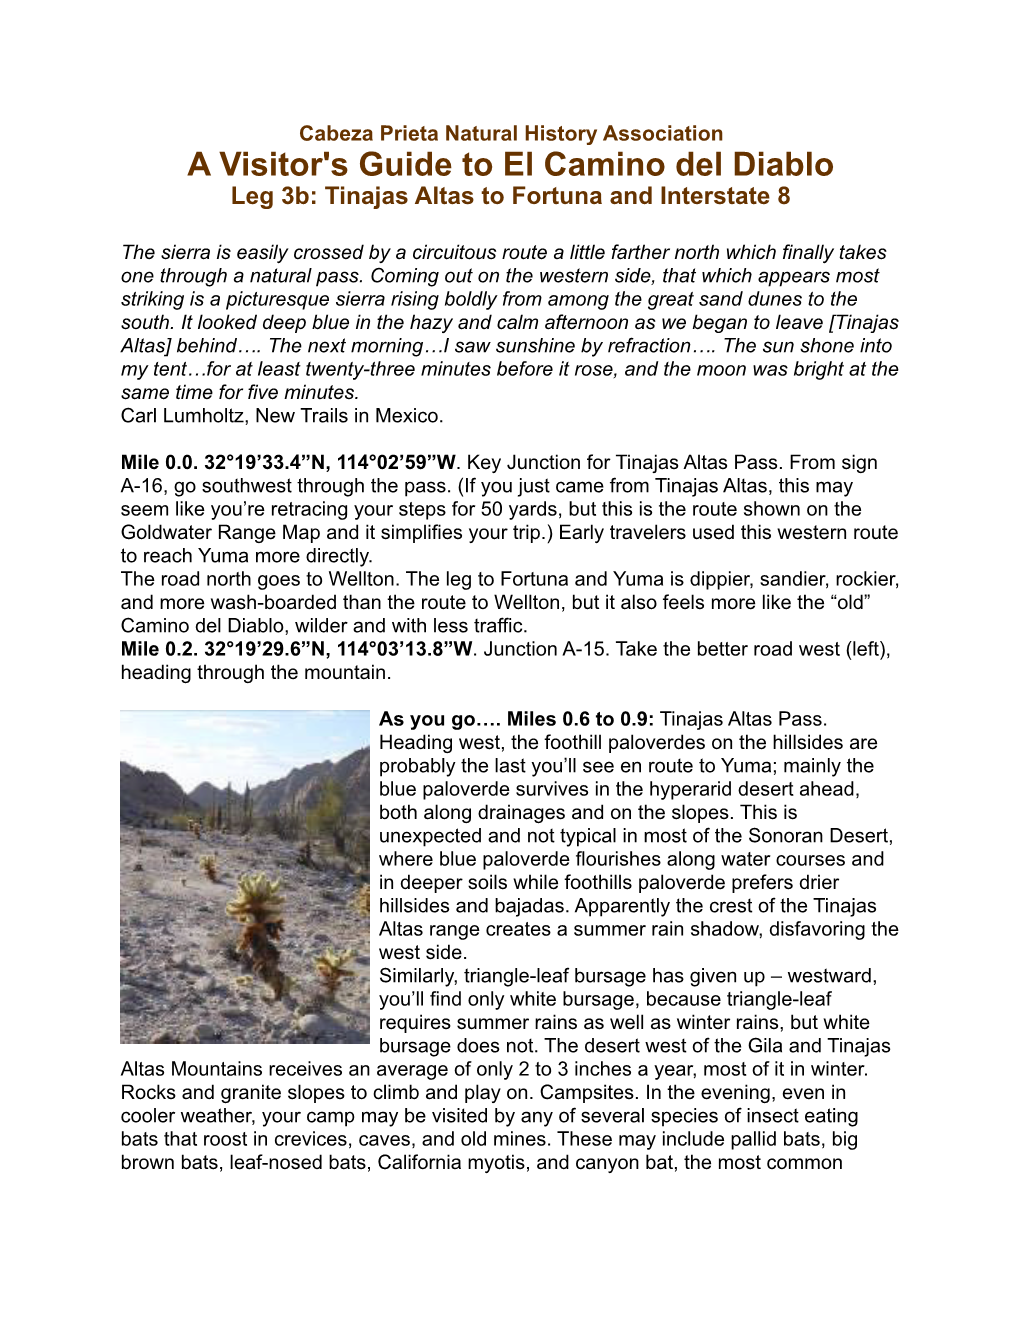 A Visitor's Guide to El Camino Del Diablo Leg 3B: Tinajas Altas to Fortuna and Interstate 8